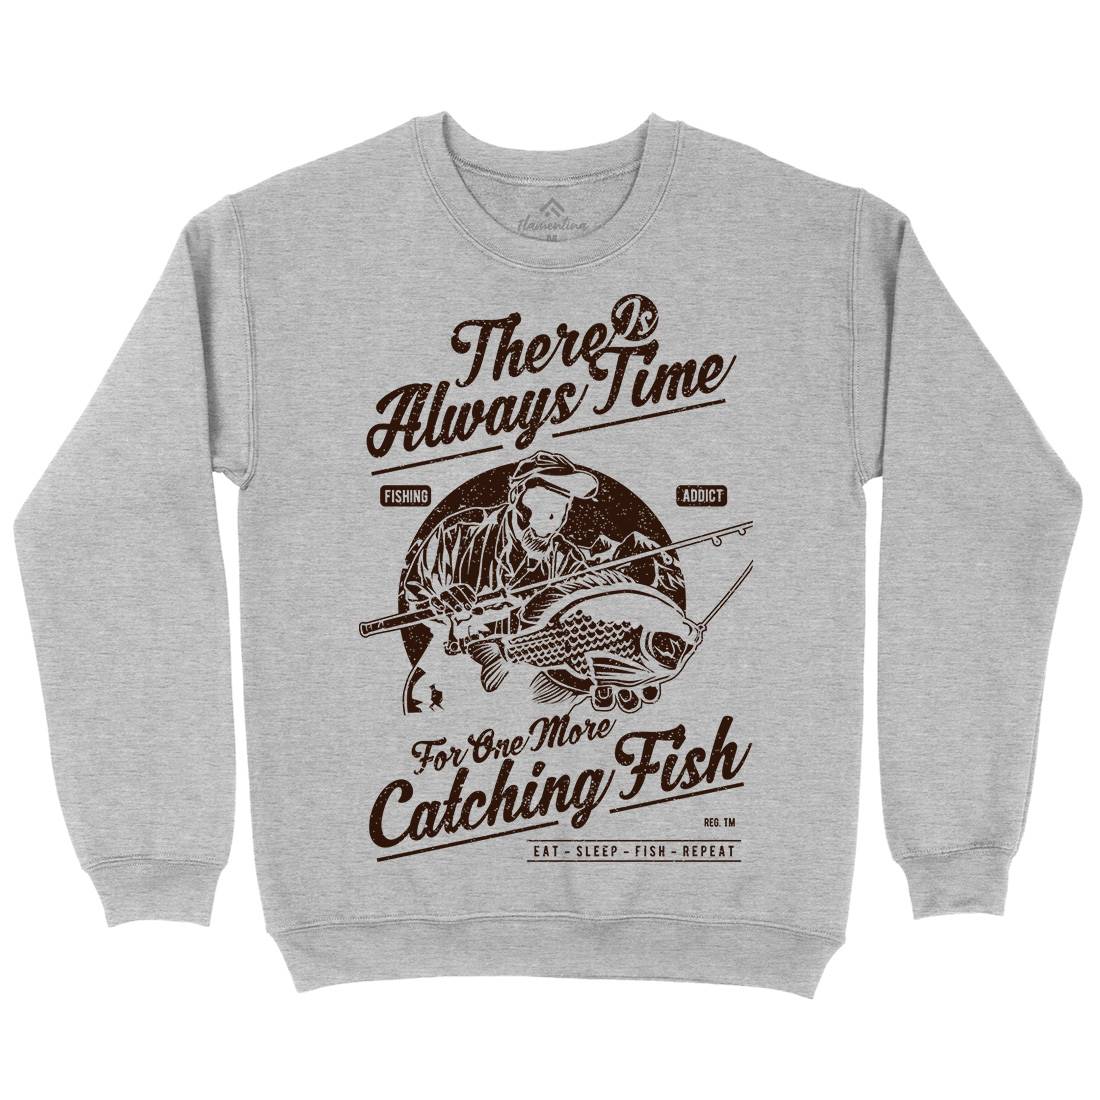 One More Catching Kids Crew Neck Sweatshirt Fishing A731